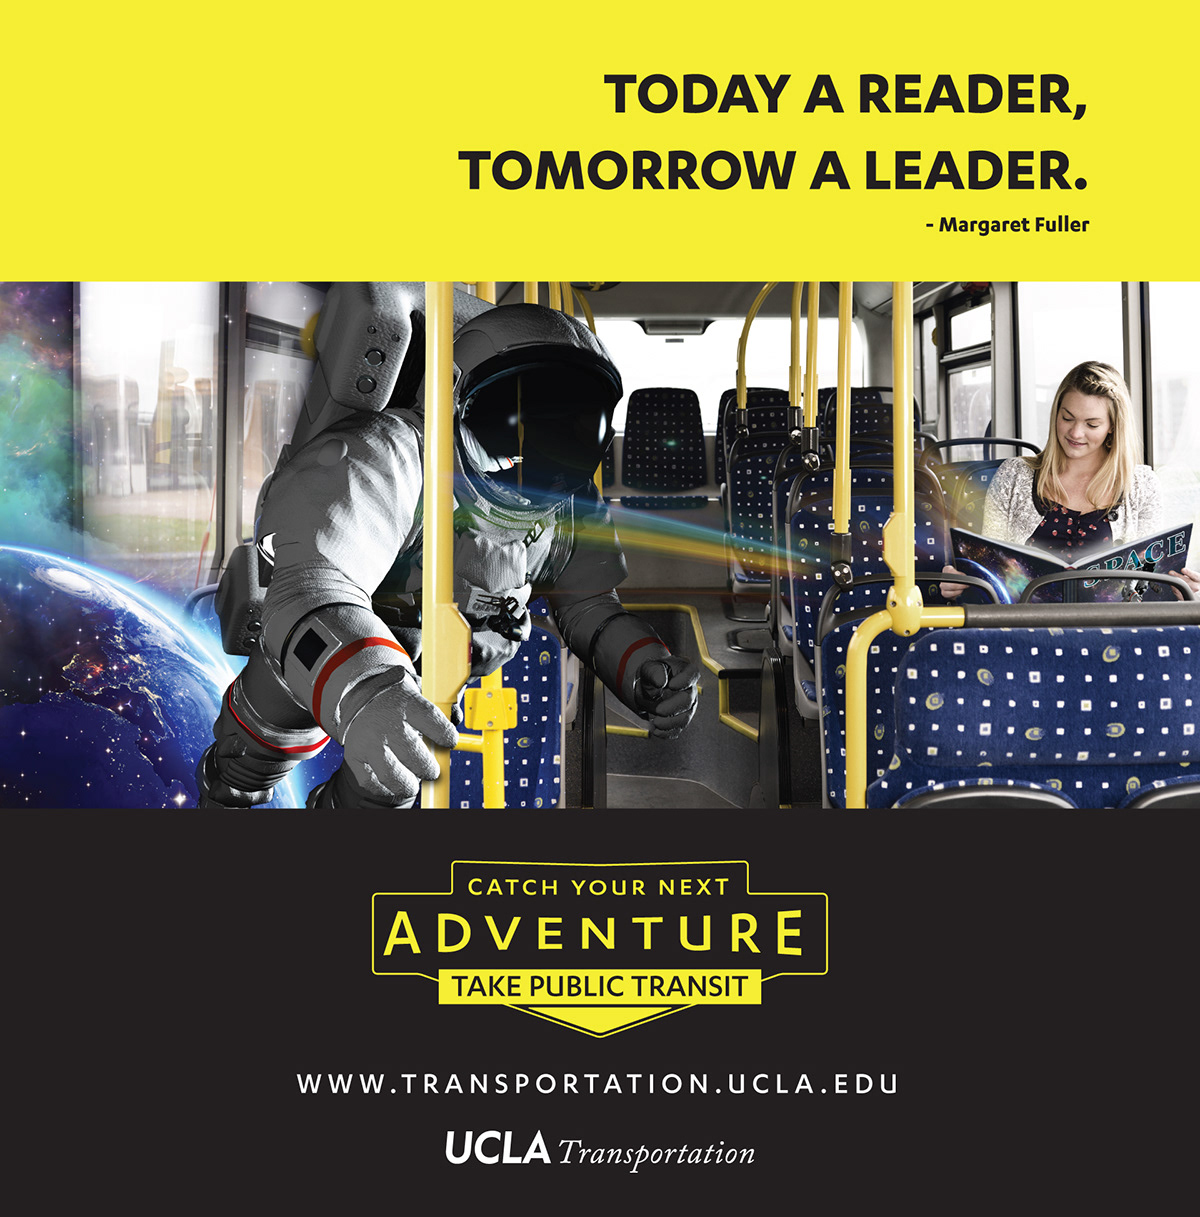 Adobe Portfolio Transit adventure Public Transit ucla bus Reading astronaut Space  transportation alternative